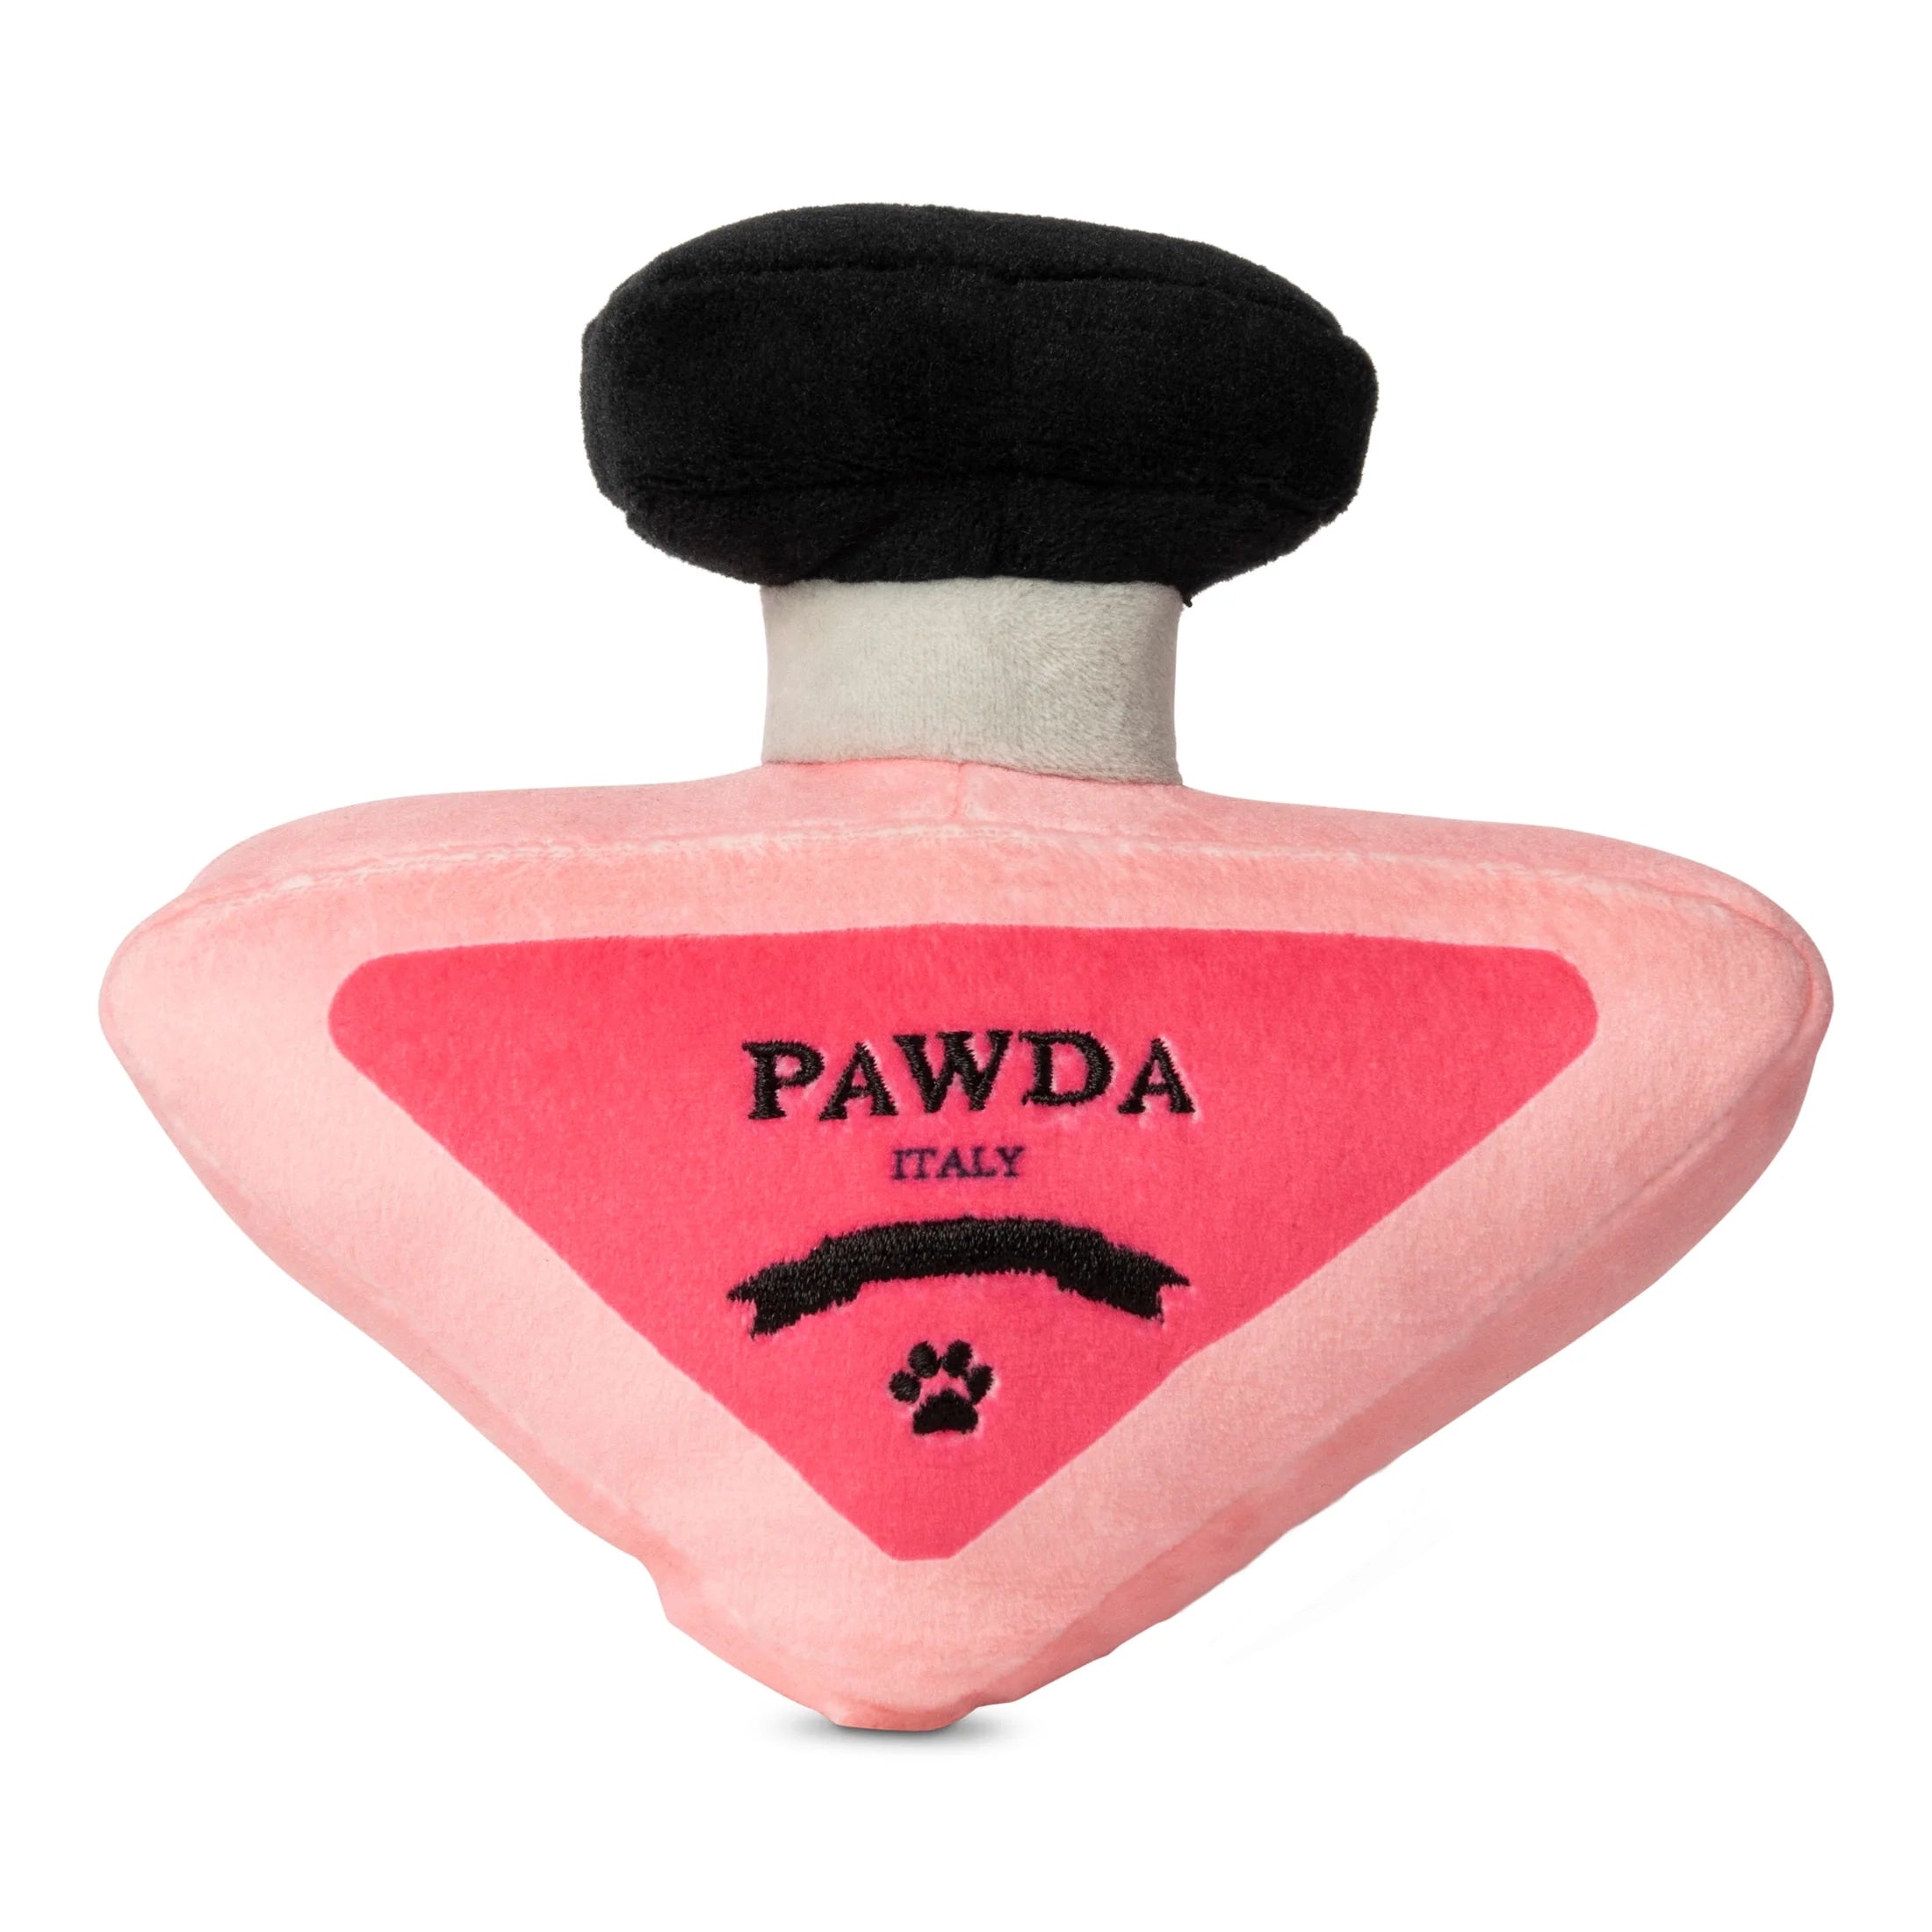 Pawda Perfume